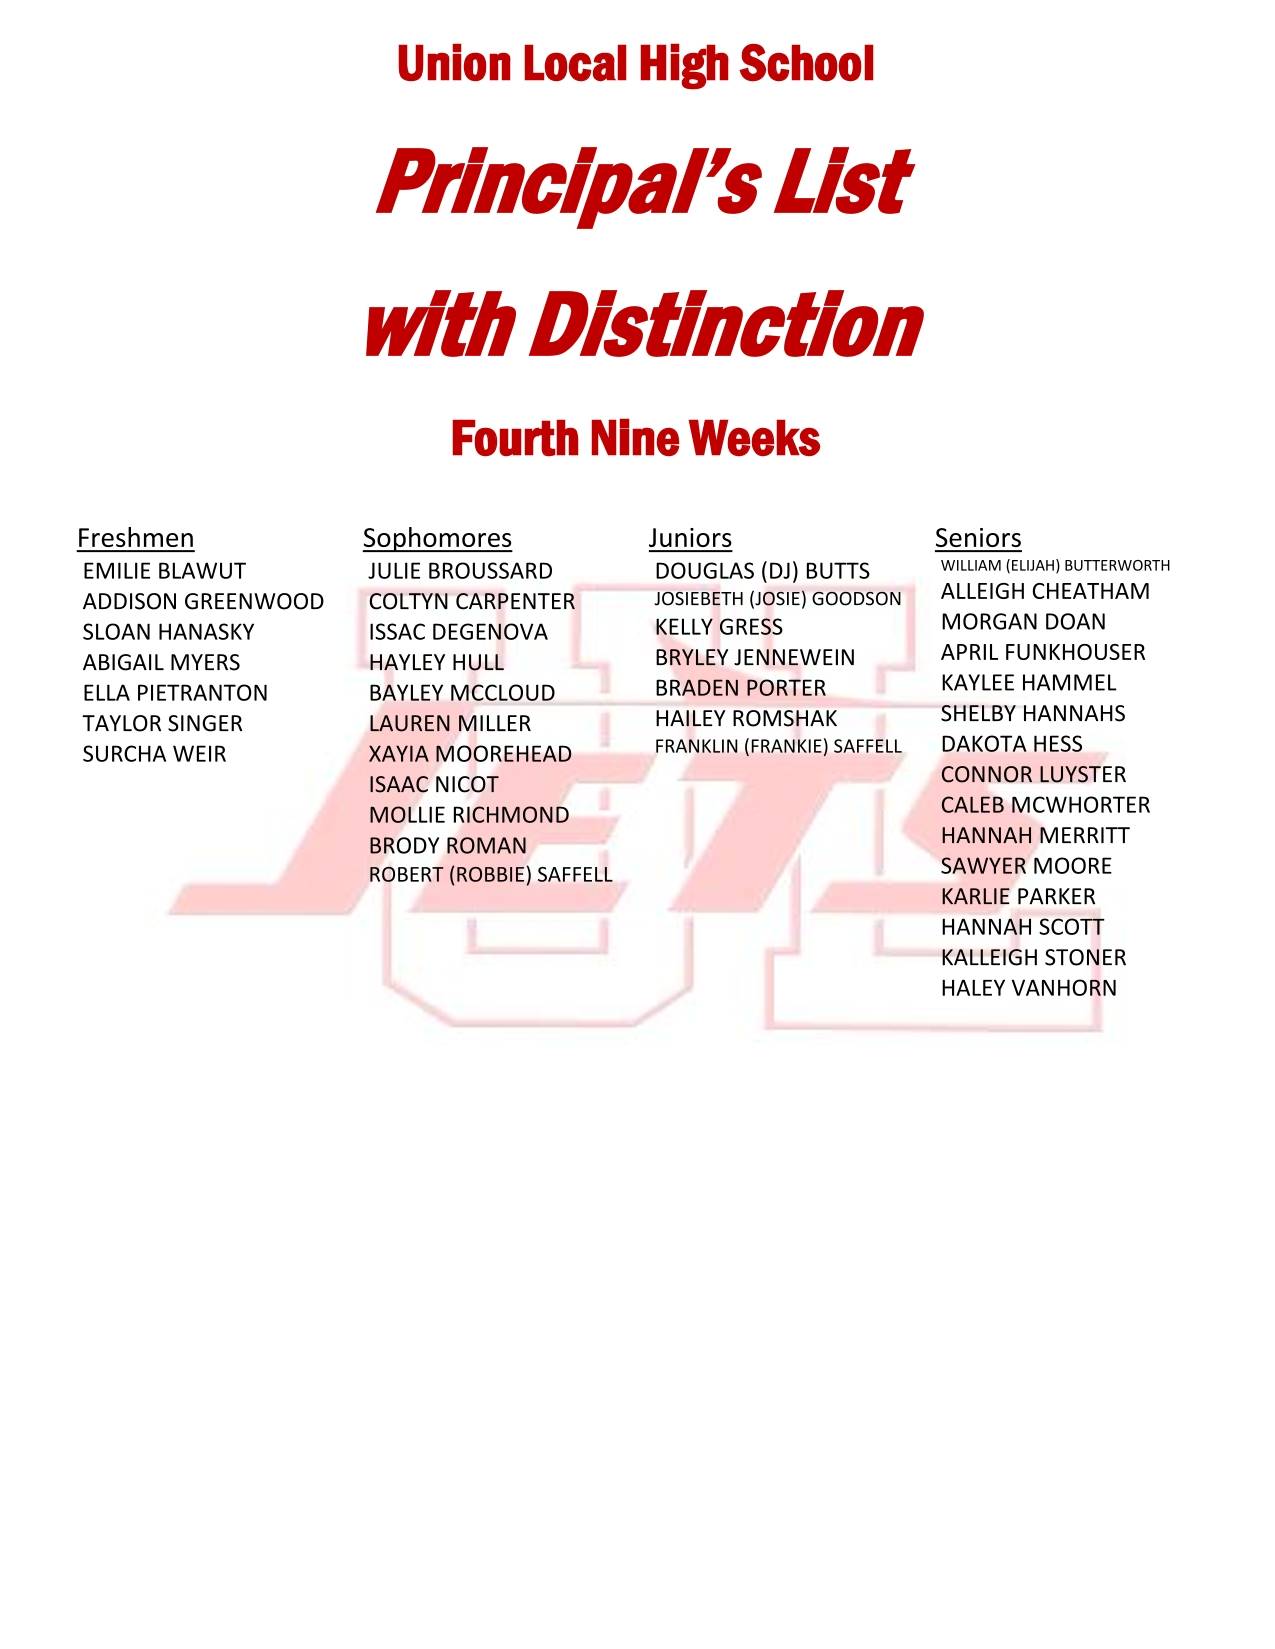 Principal's List with Distinction